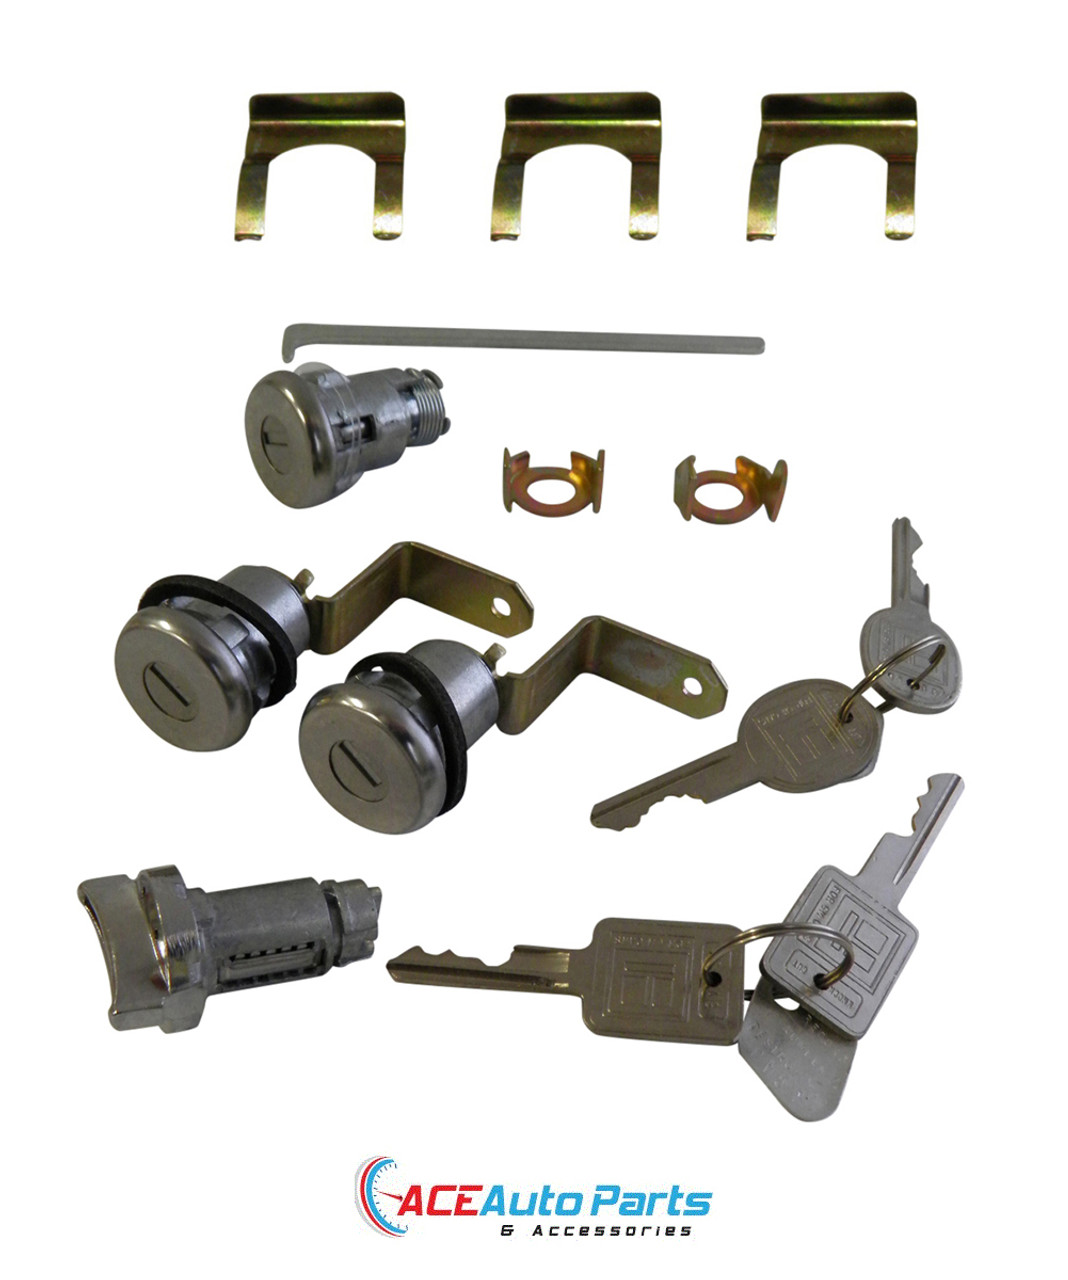 Ignition Barrel + Door Locks + Boot Lock Set For Holden HK HT HG